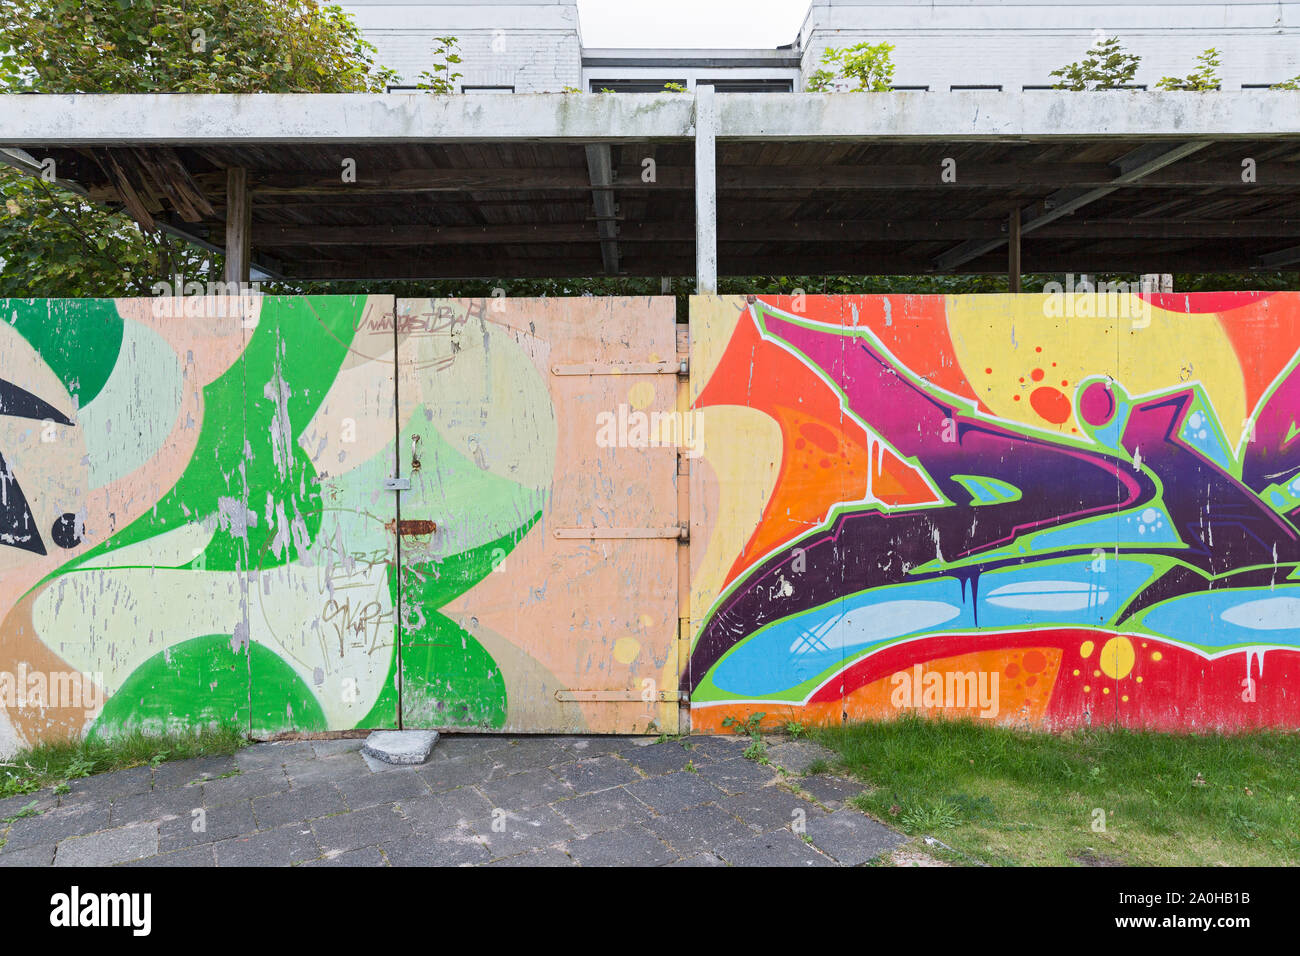 Norderney; Graffiti, Bauzaun, ruine, Weststrandstrasse Foto Stock